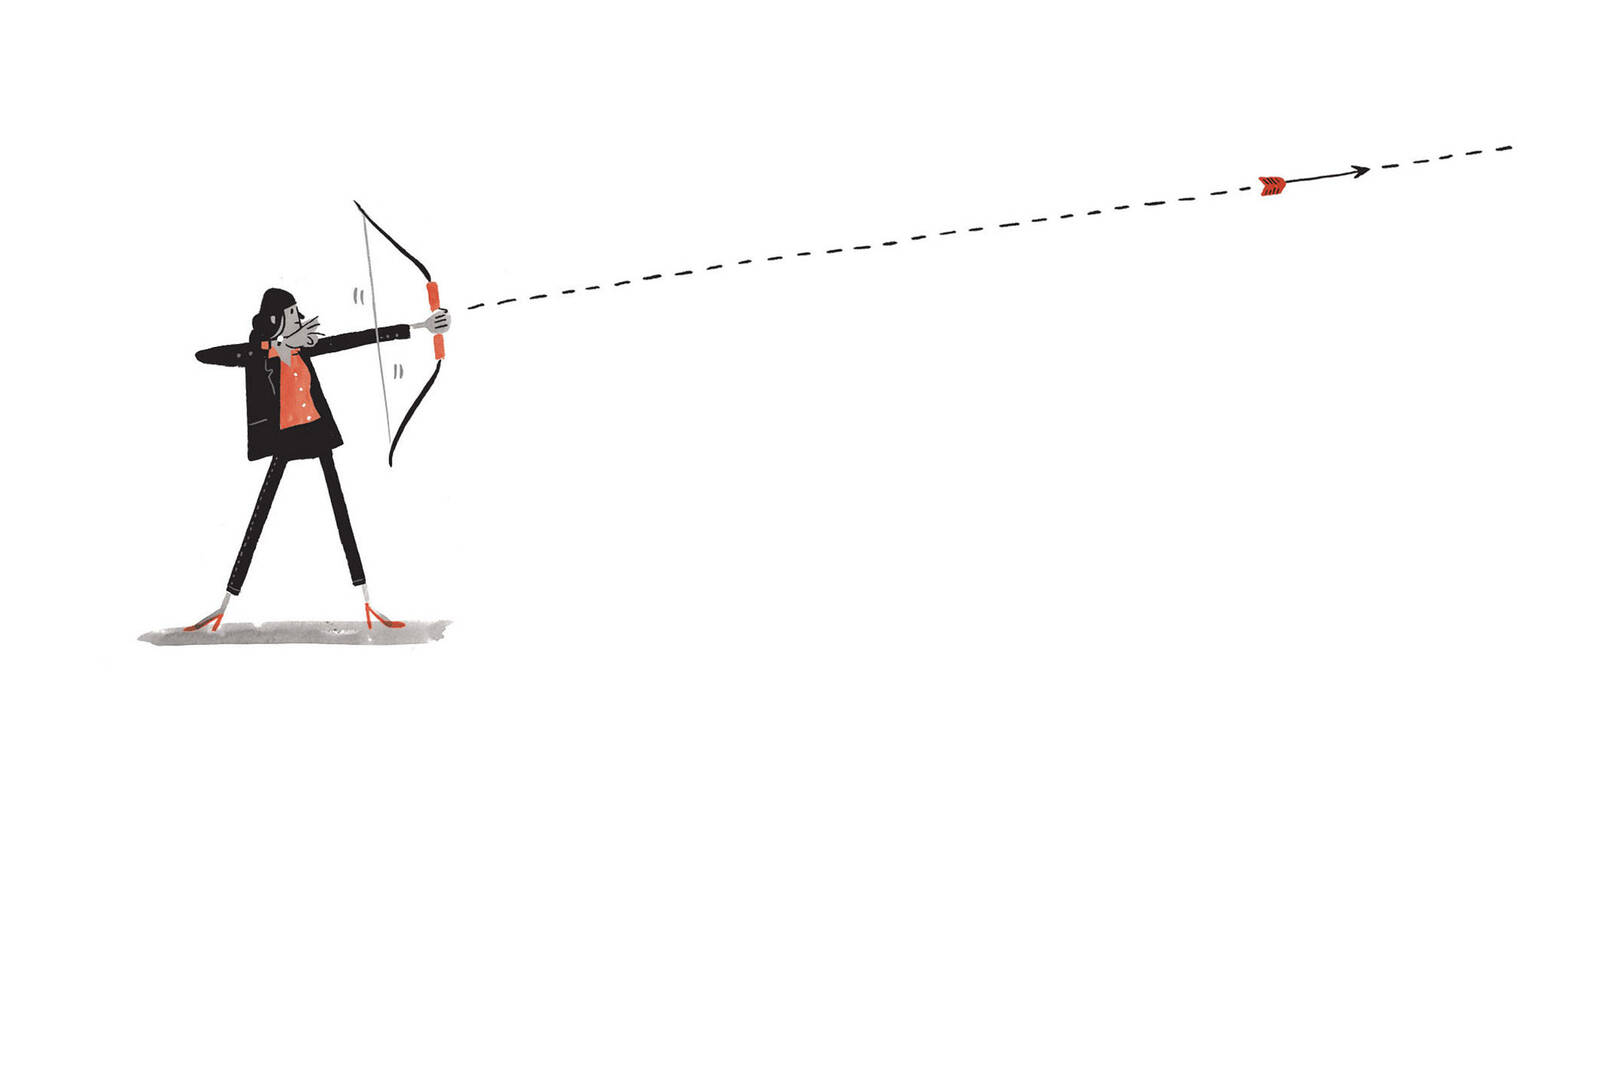 Woman shoots arrow